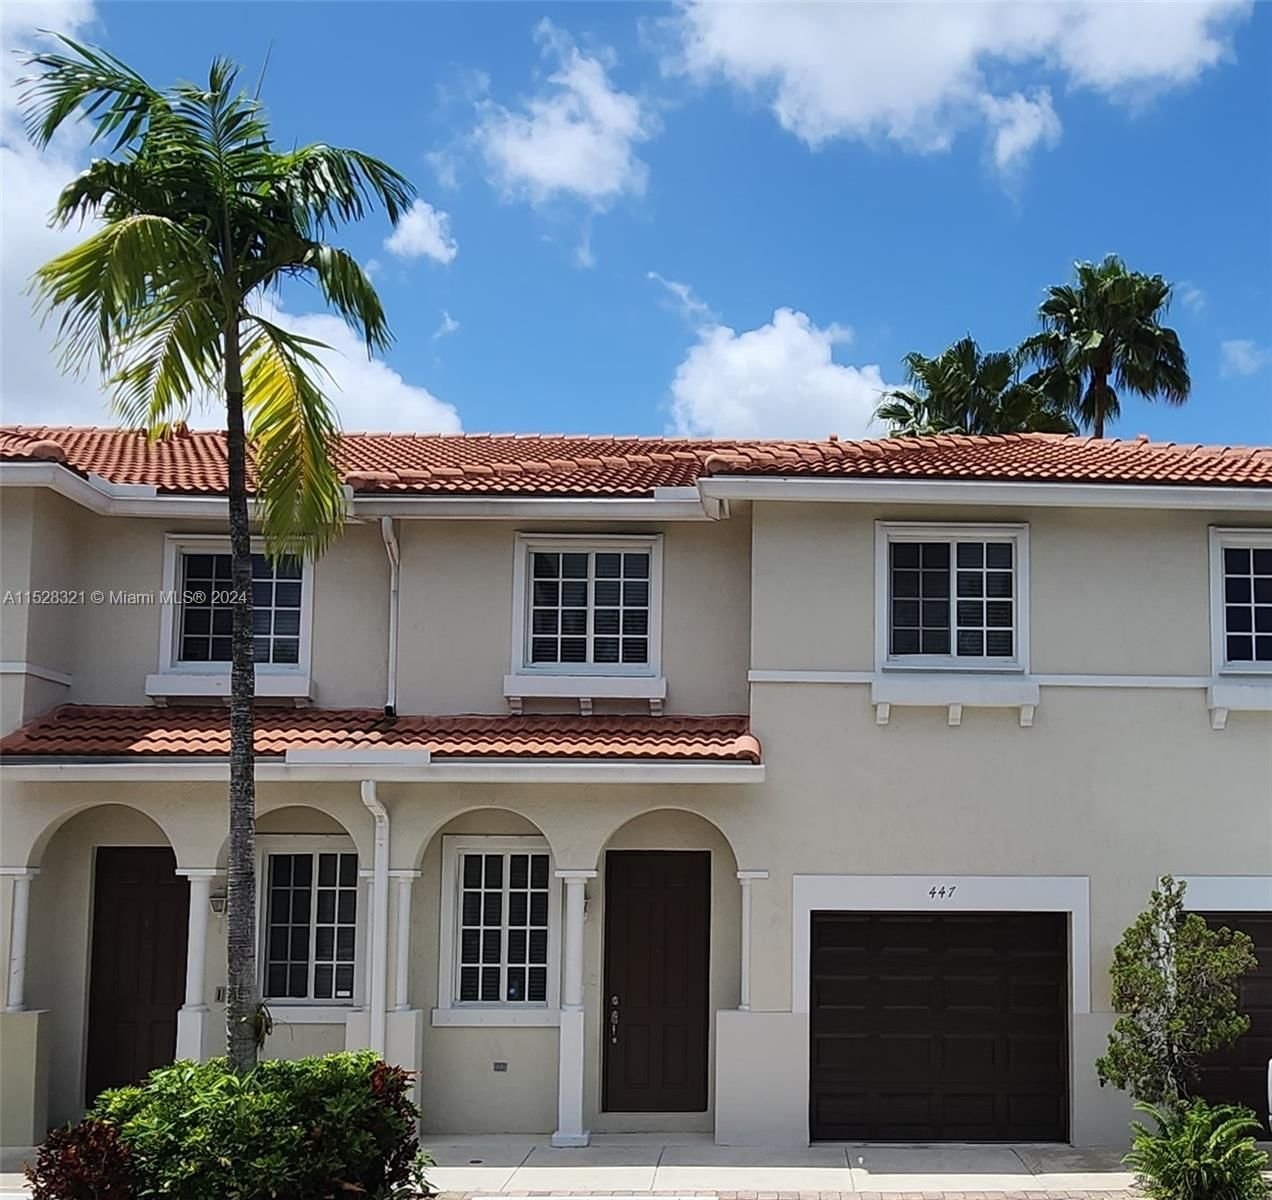 Real estate property located at 20901 14th pl #447, Miami-Dade County, MAJORCA ISLES IV CONDO, Miami Gardens, FL